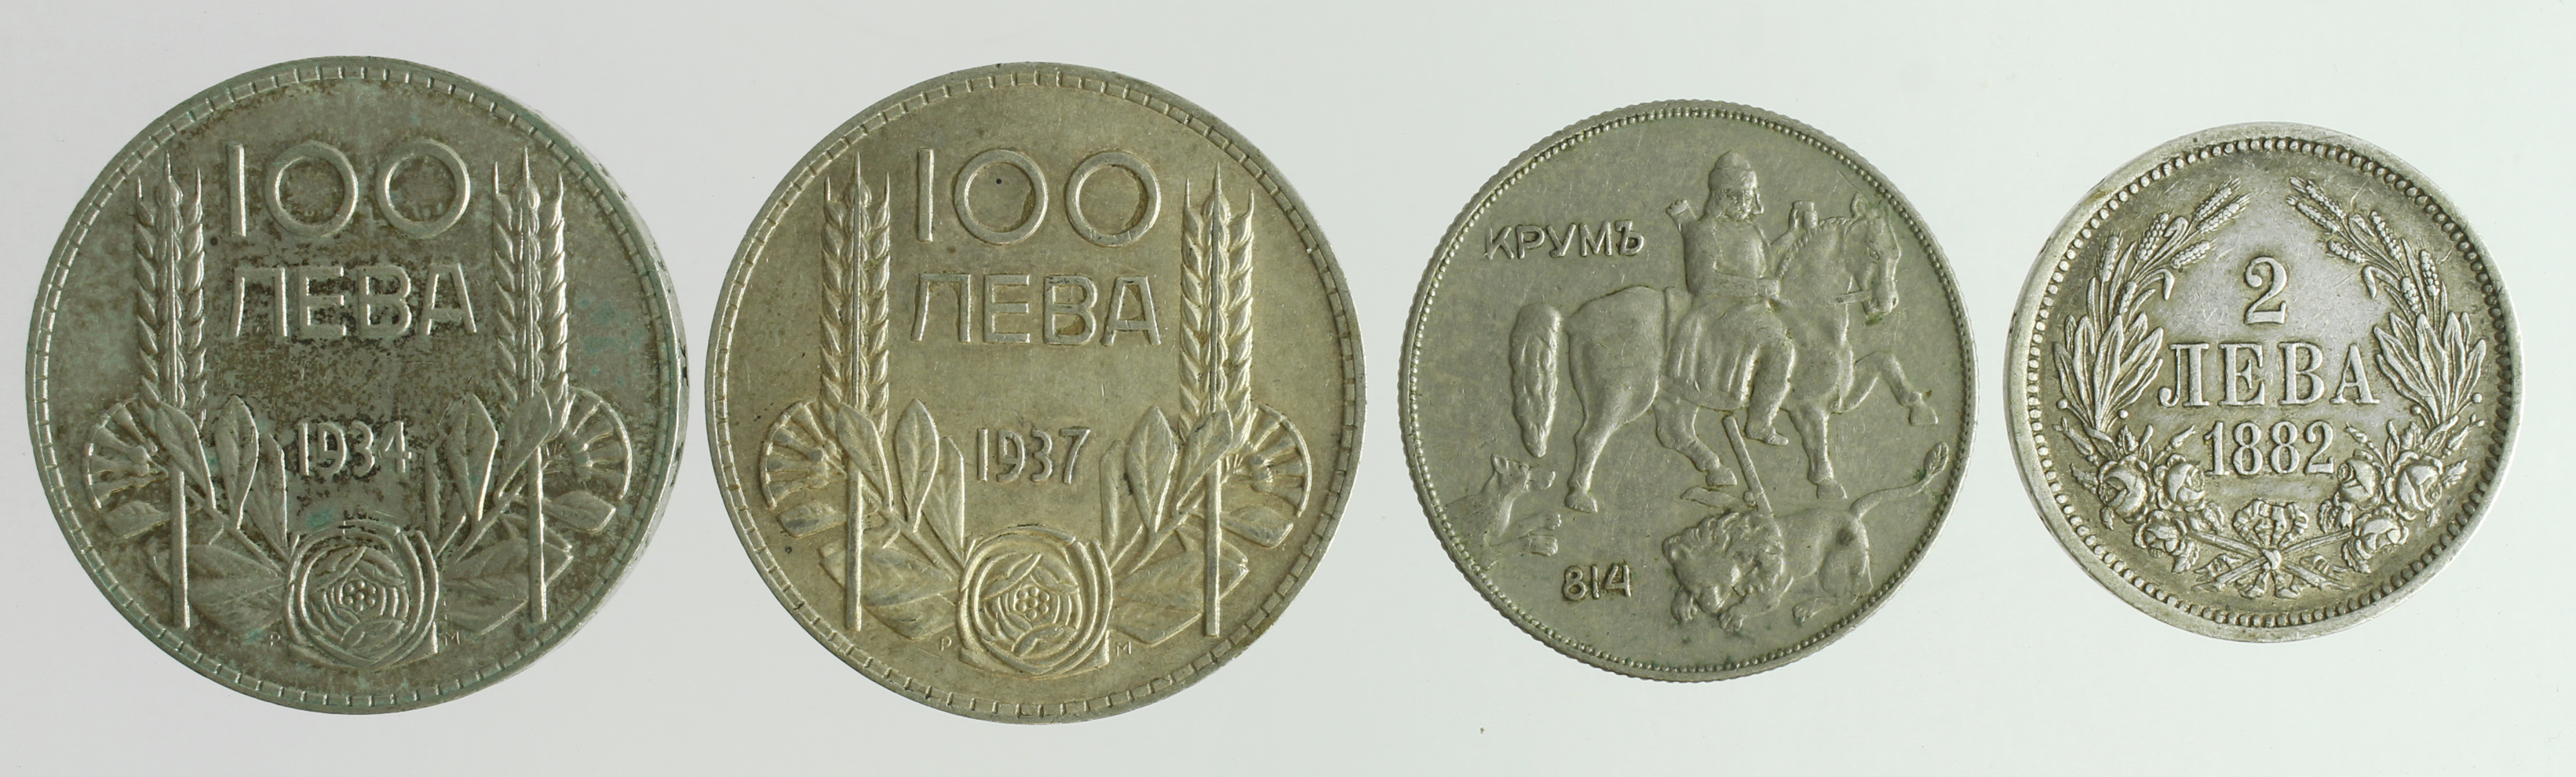 Bulgaria (4): 100 Leva 1934 GVF, 100 Leva 1937 nEF, 10 Leva 1930 VF, and 2 Leva 1882 VF/GVF - Image 2 of 2